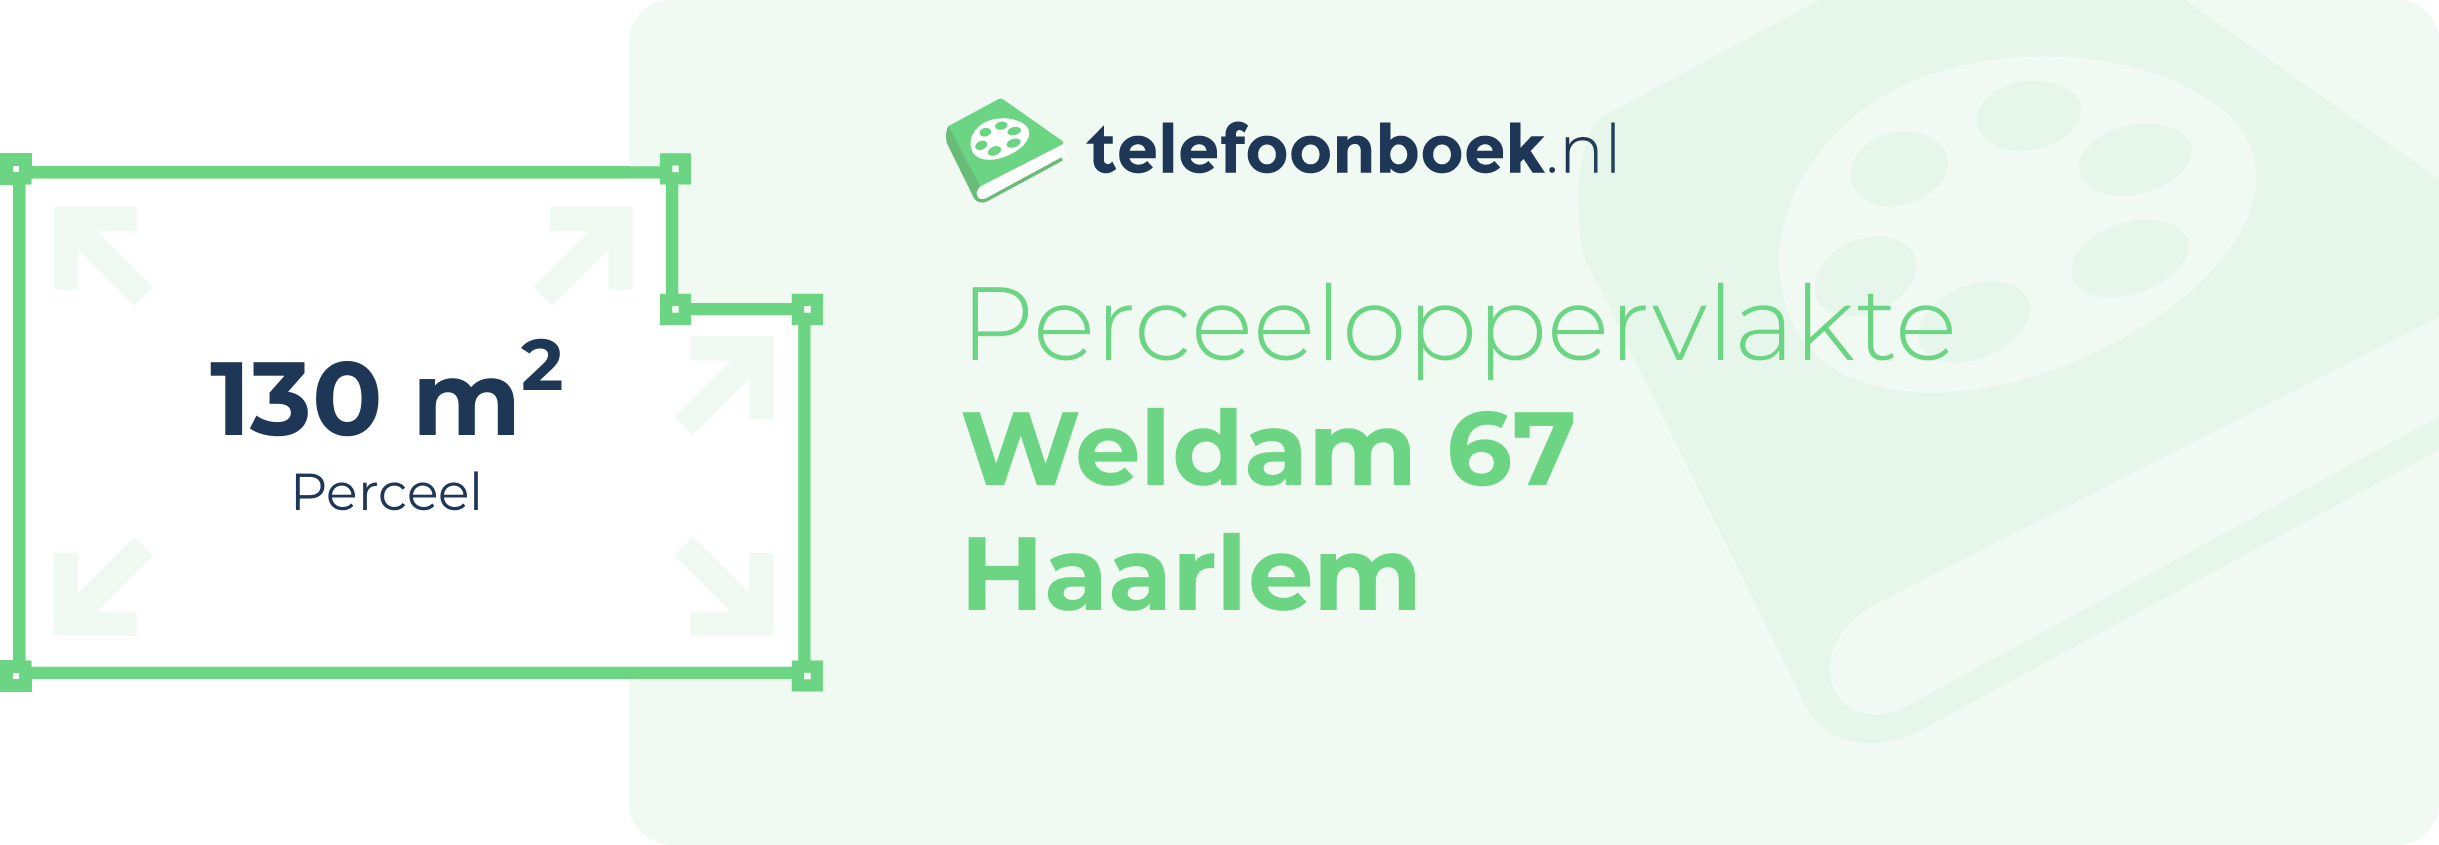 Perceeloppervlakte Weldam 67 Haarlem